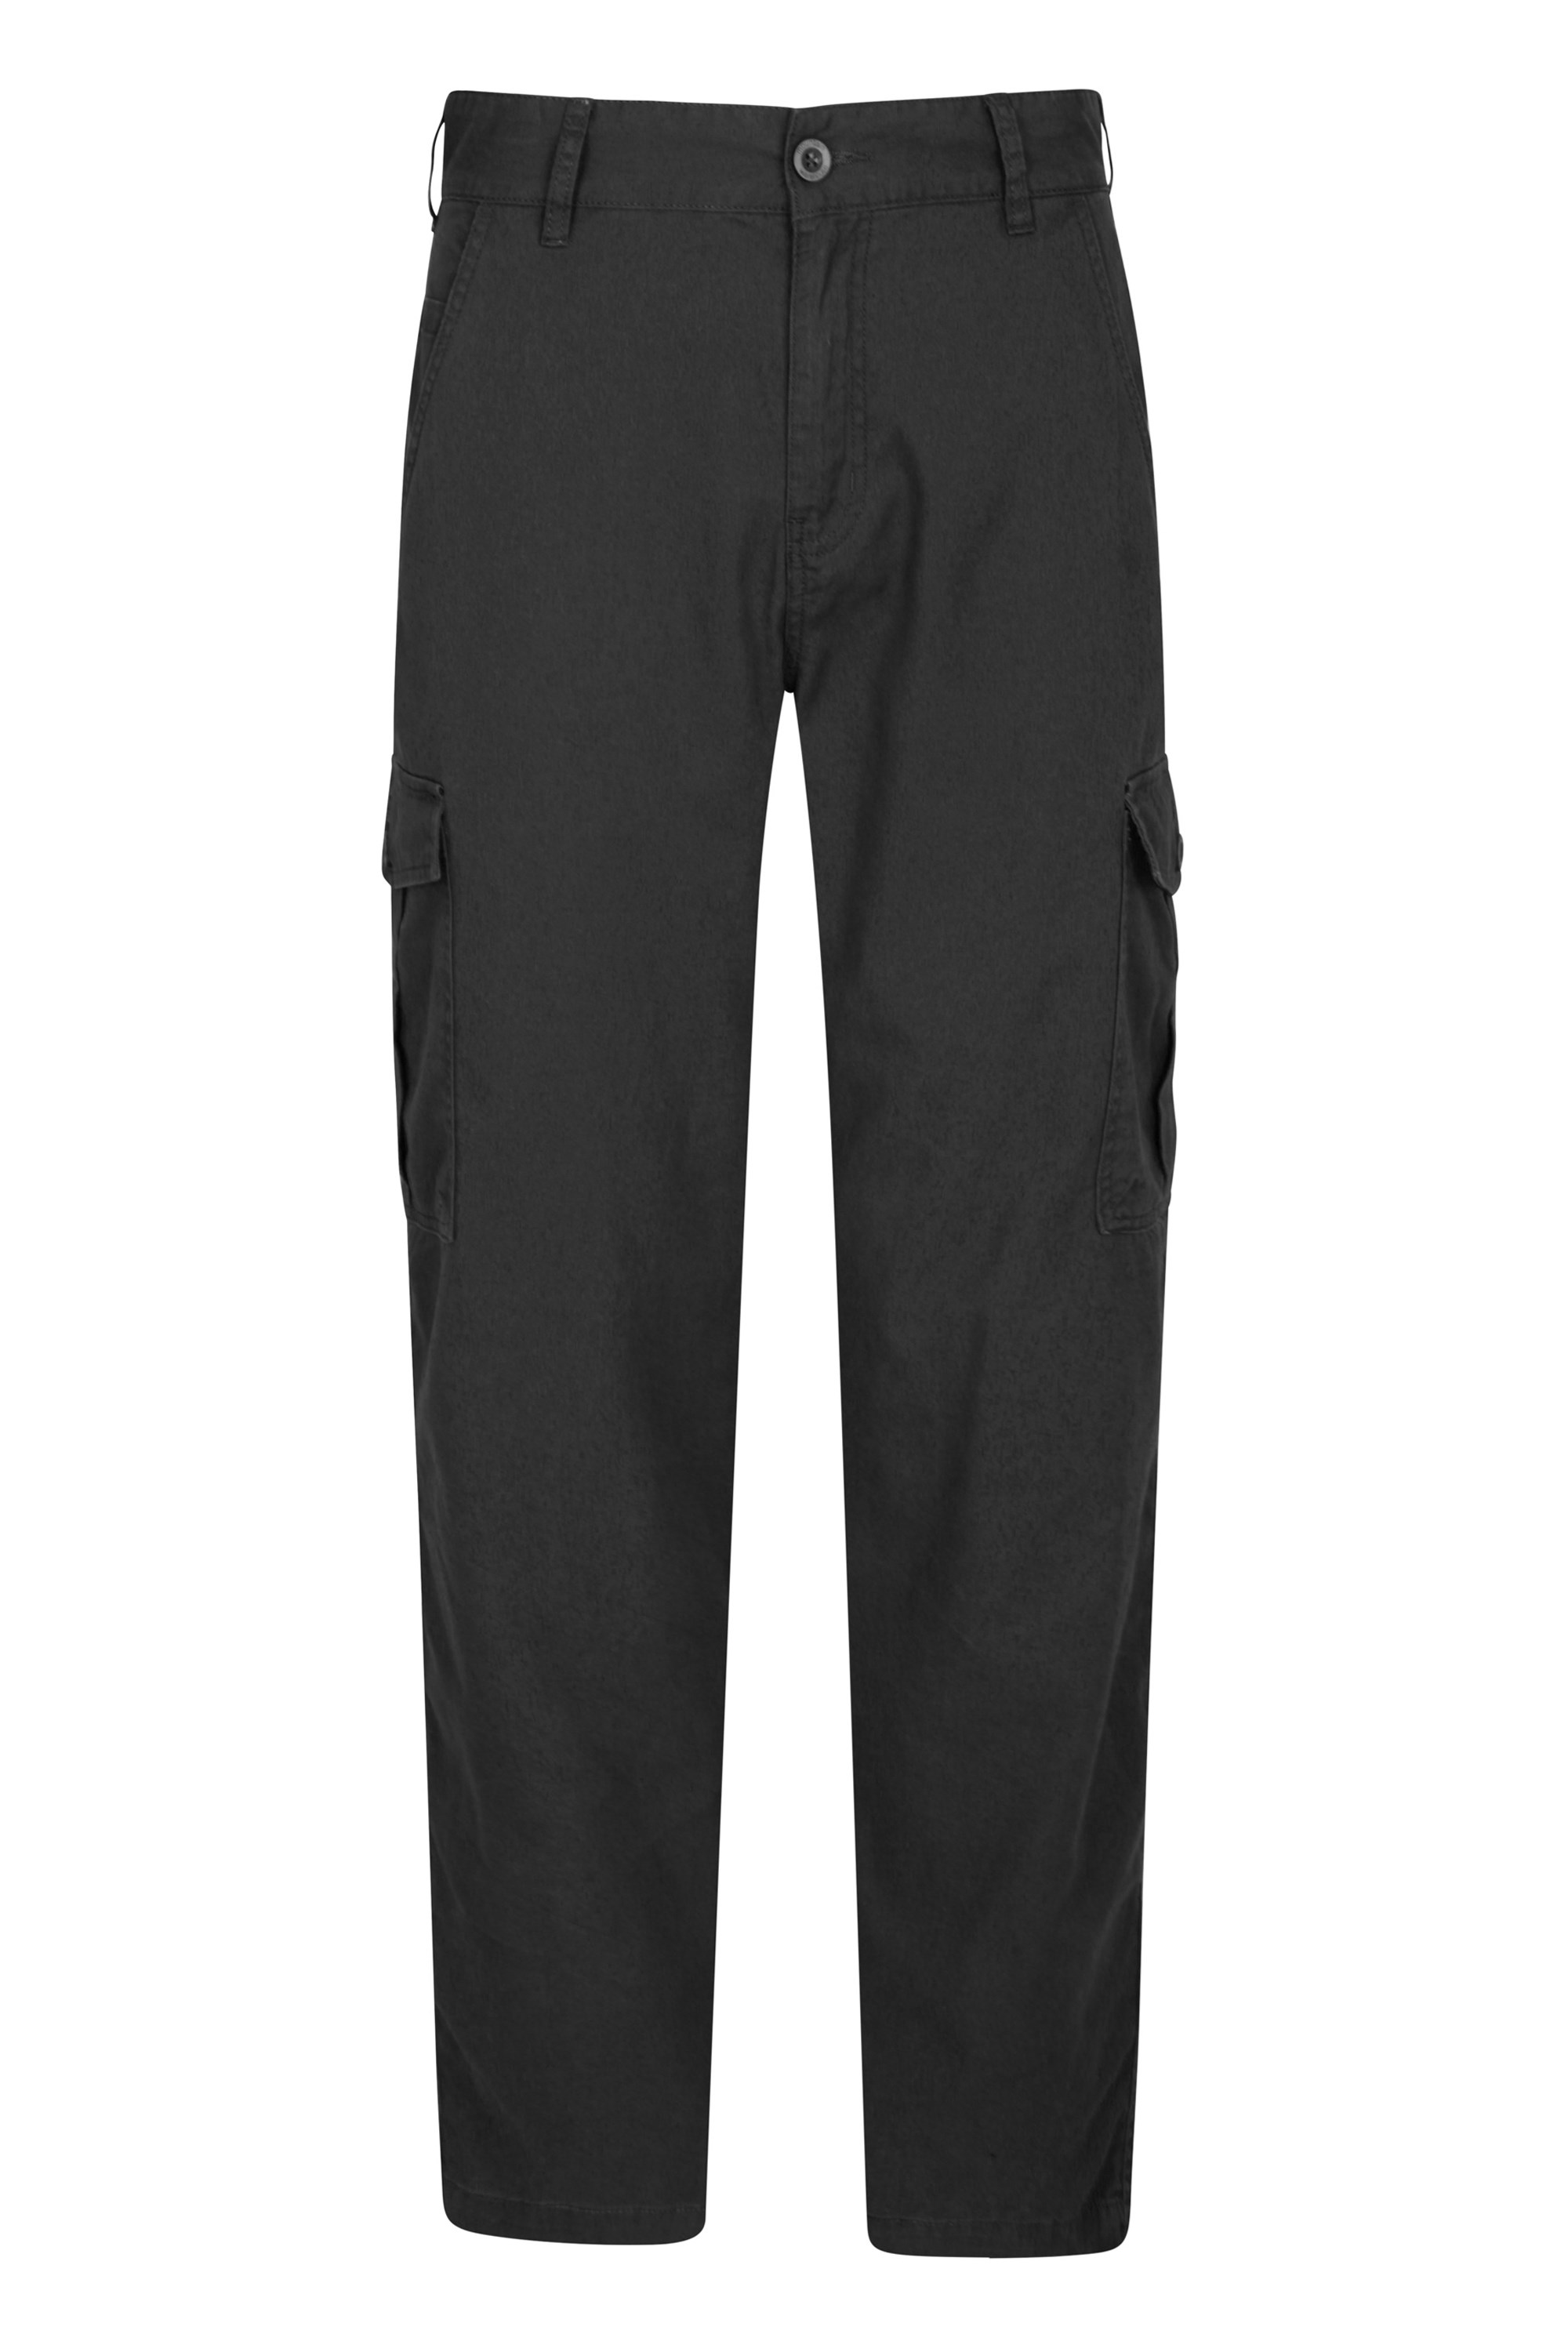 Lakeside Cargo Mens Trousers - Short Length - Black